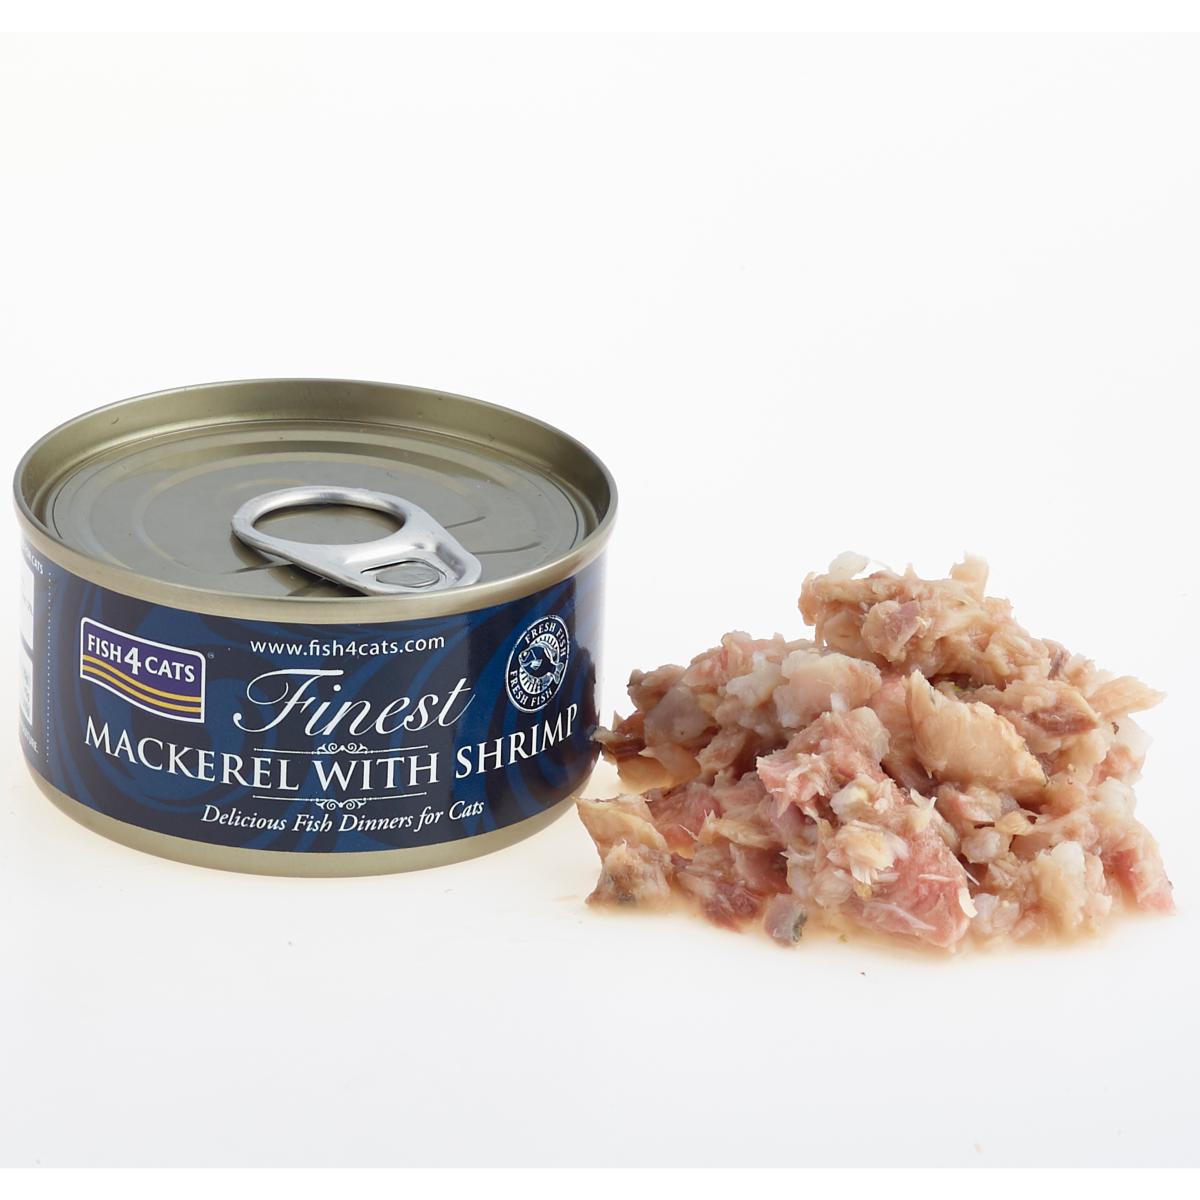 Fish4Cats Finest | Wet Cat Food | Mackerel with Shrimp - 70g